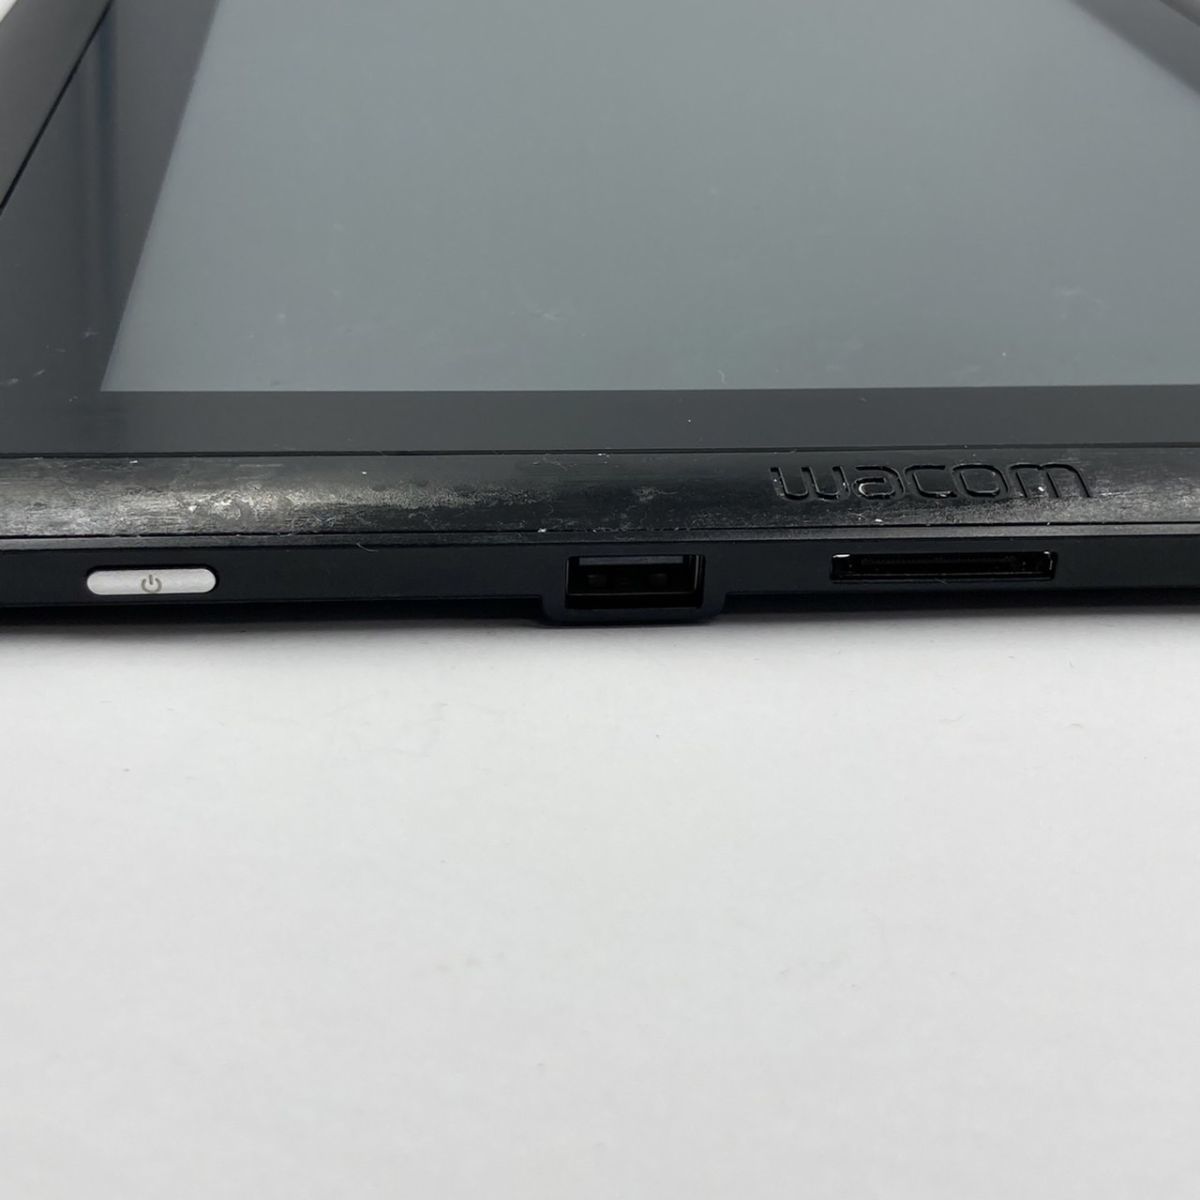 Z733-I34-2635 Wacom ワコム Cintiq シンティック 13HD 液晶ペンタブレット DTK-1300 2015年モデル